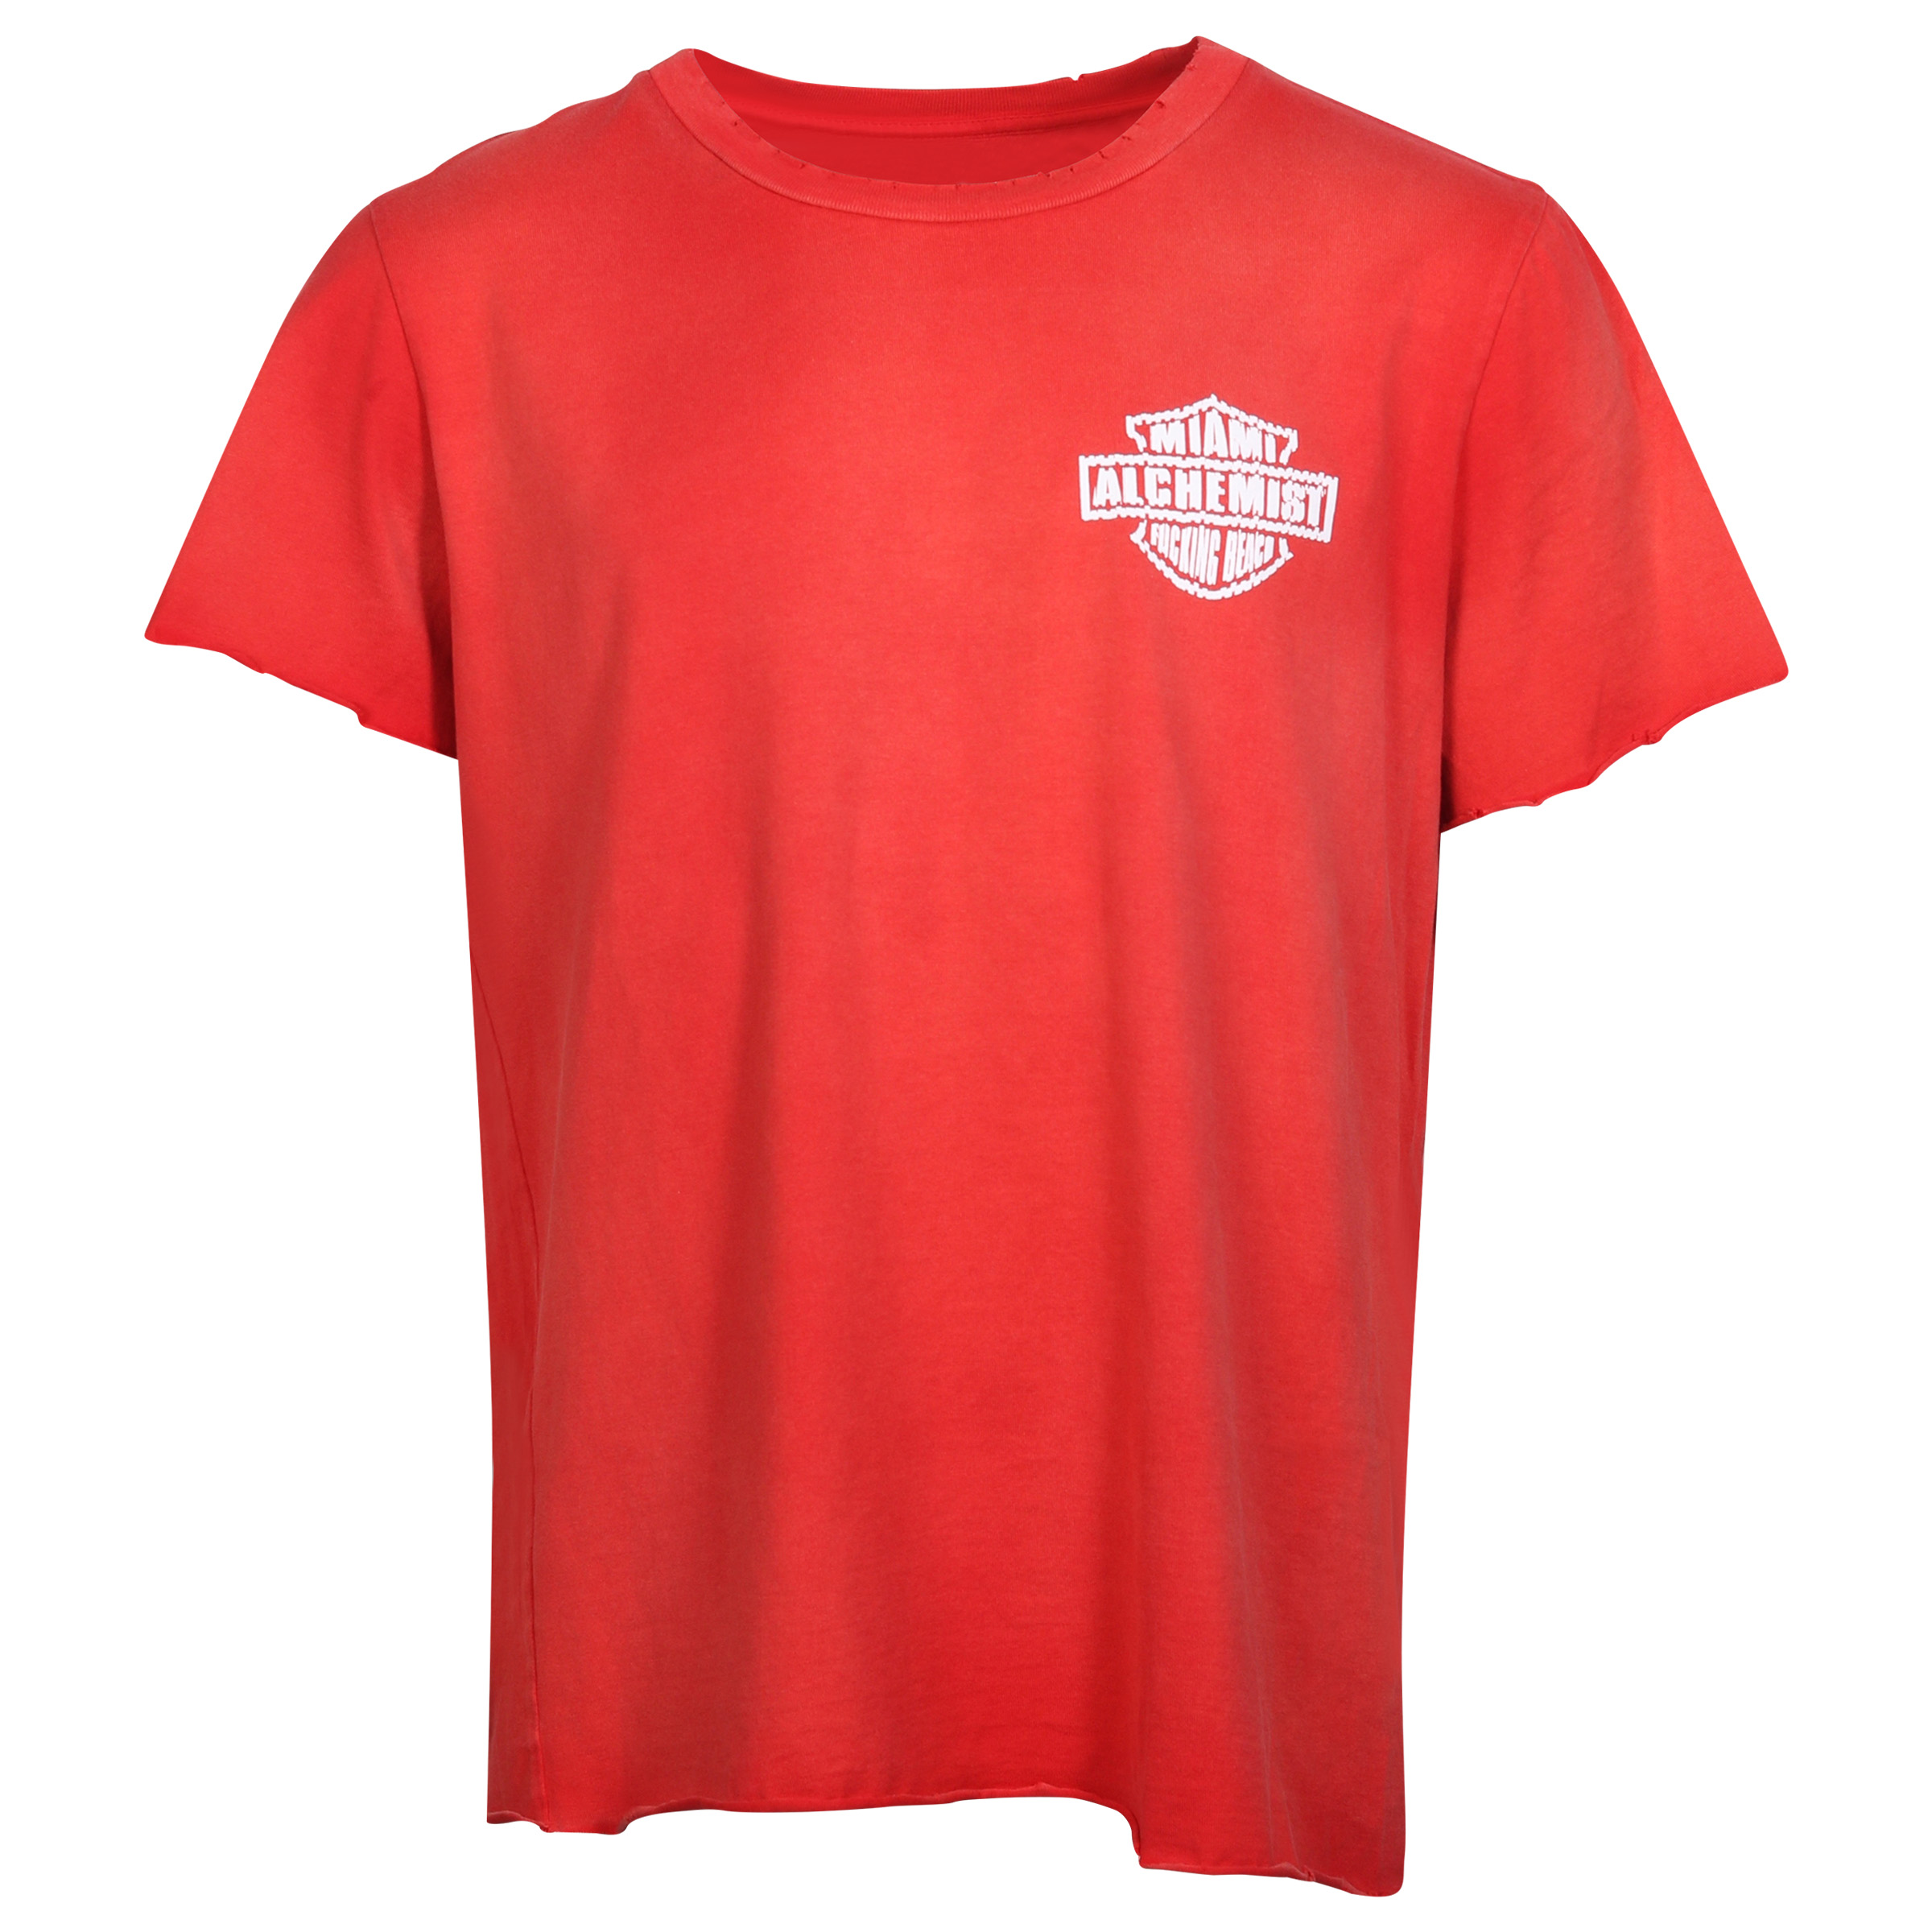 Unisex Alchemist T-Shirt McRae in Red Back Printed